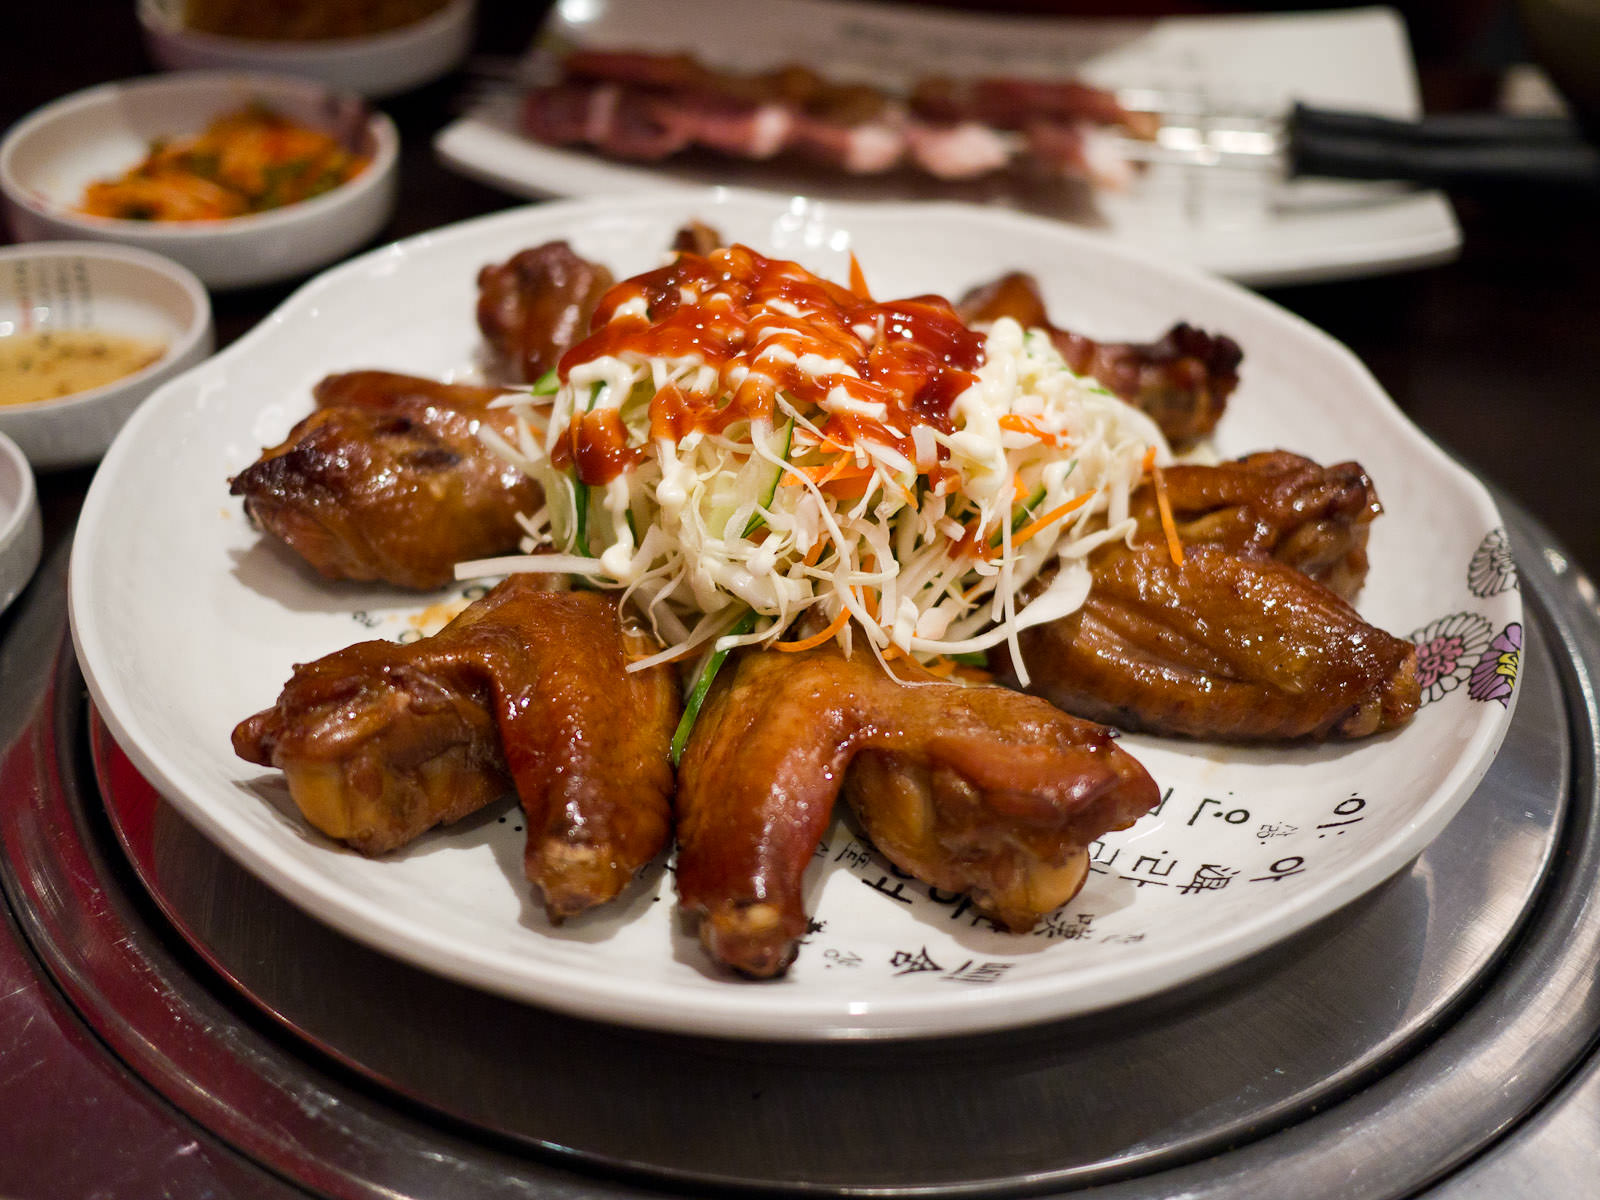 Dak lal gae gui (AU$21, roasted chicken wings)